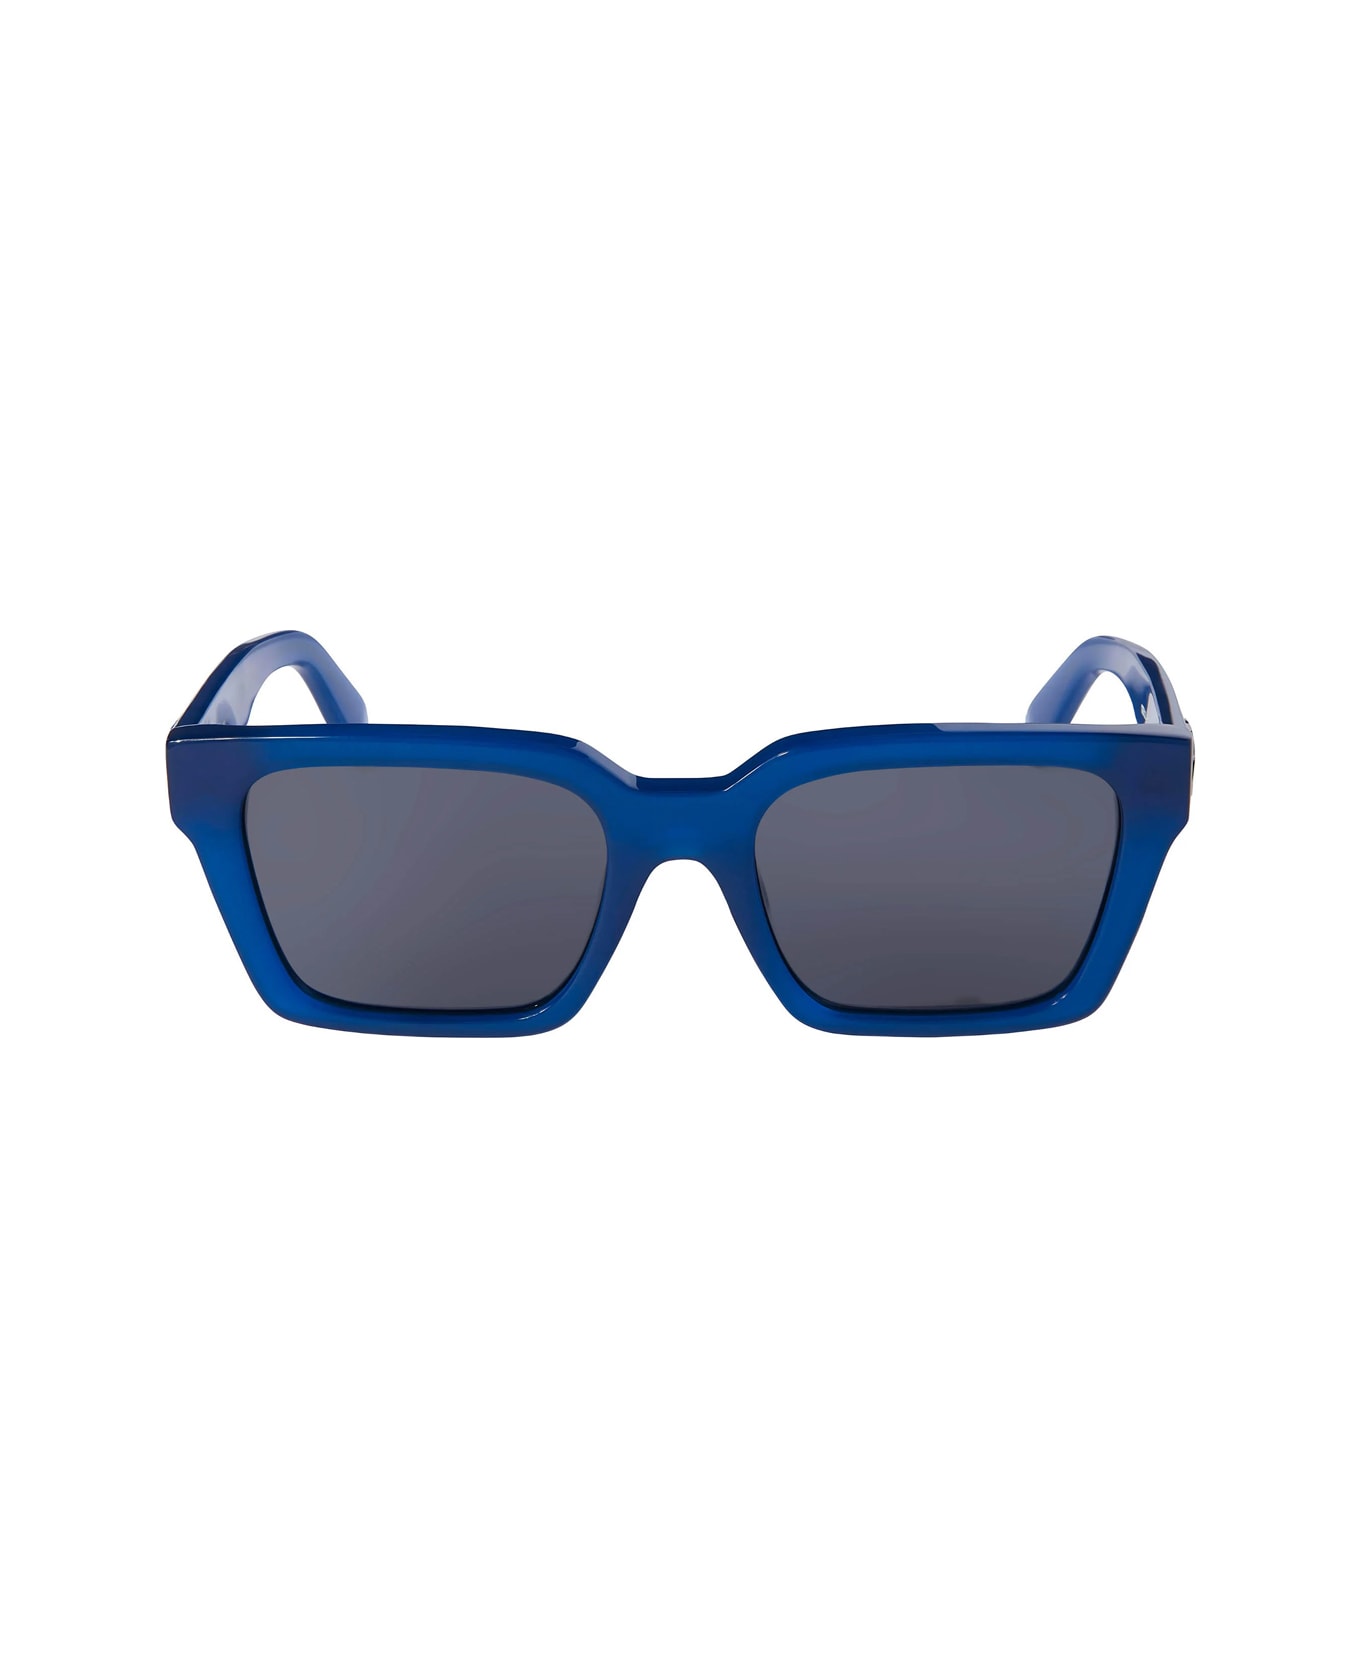 Off-White Oeri111 Branson 4507 Blue Sunglasses - Blu サングラス